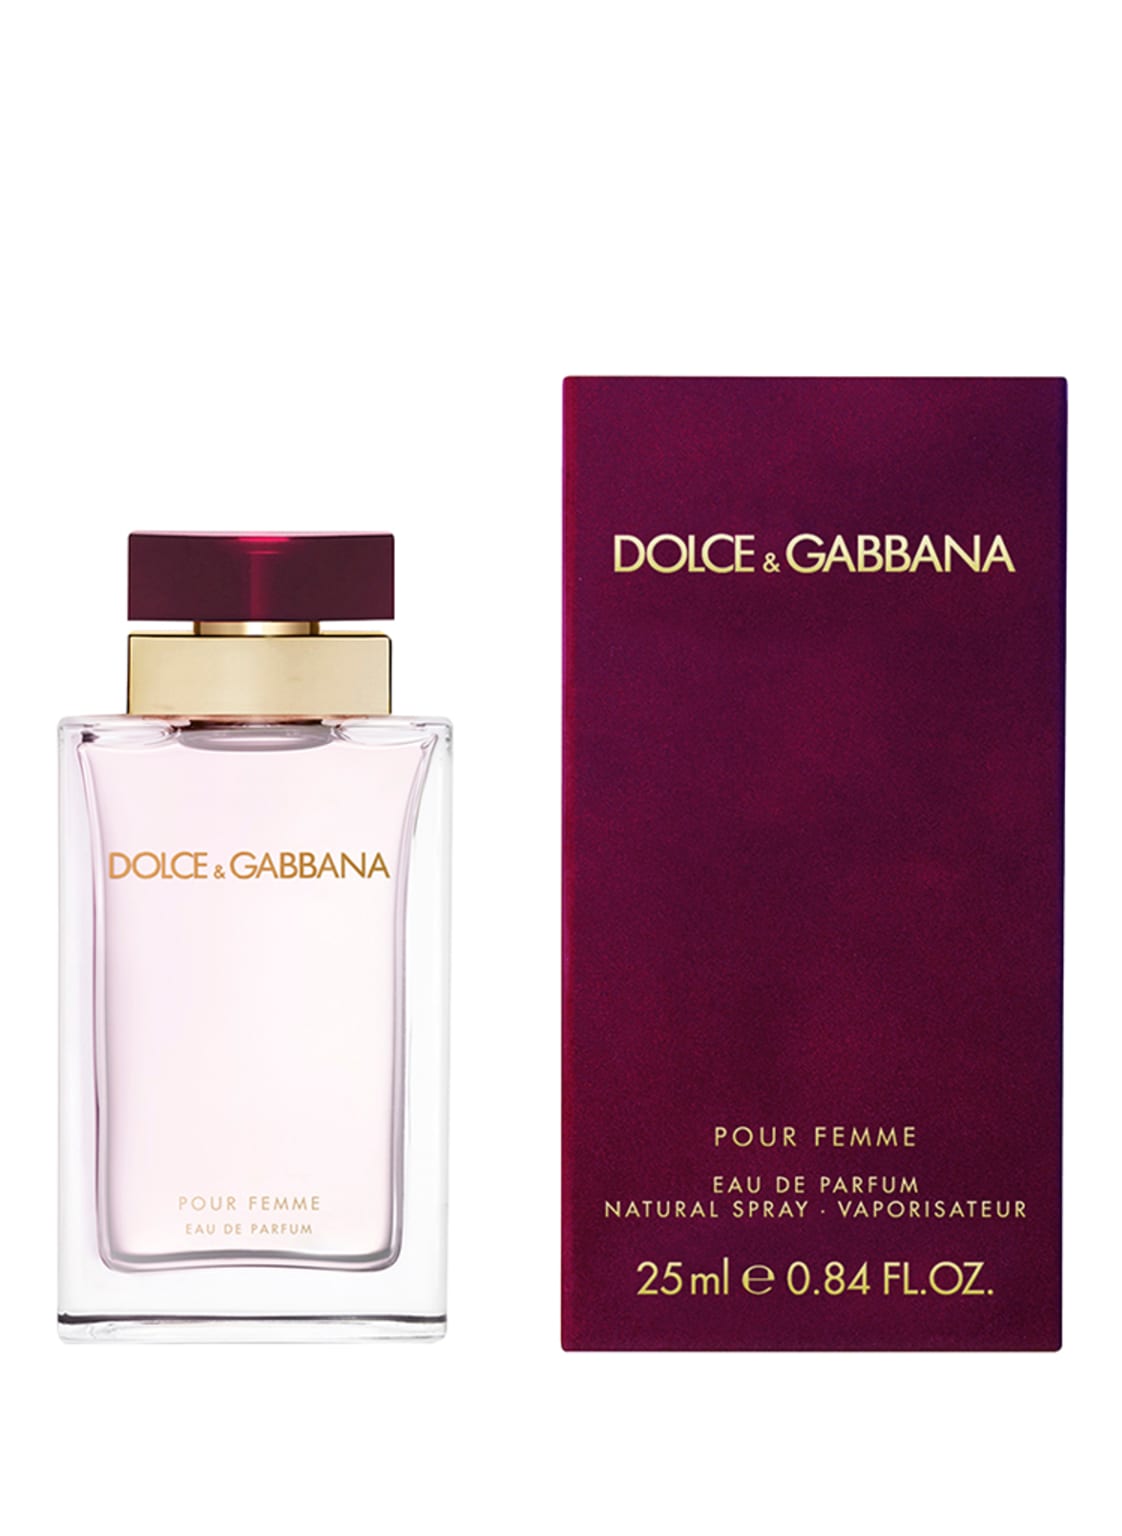 DOLCE GABBANA Beauty POUR FEMME online kaufen